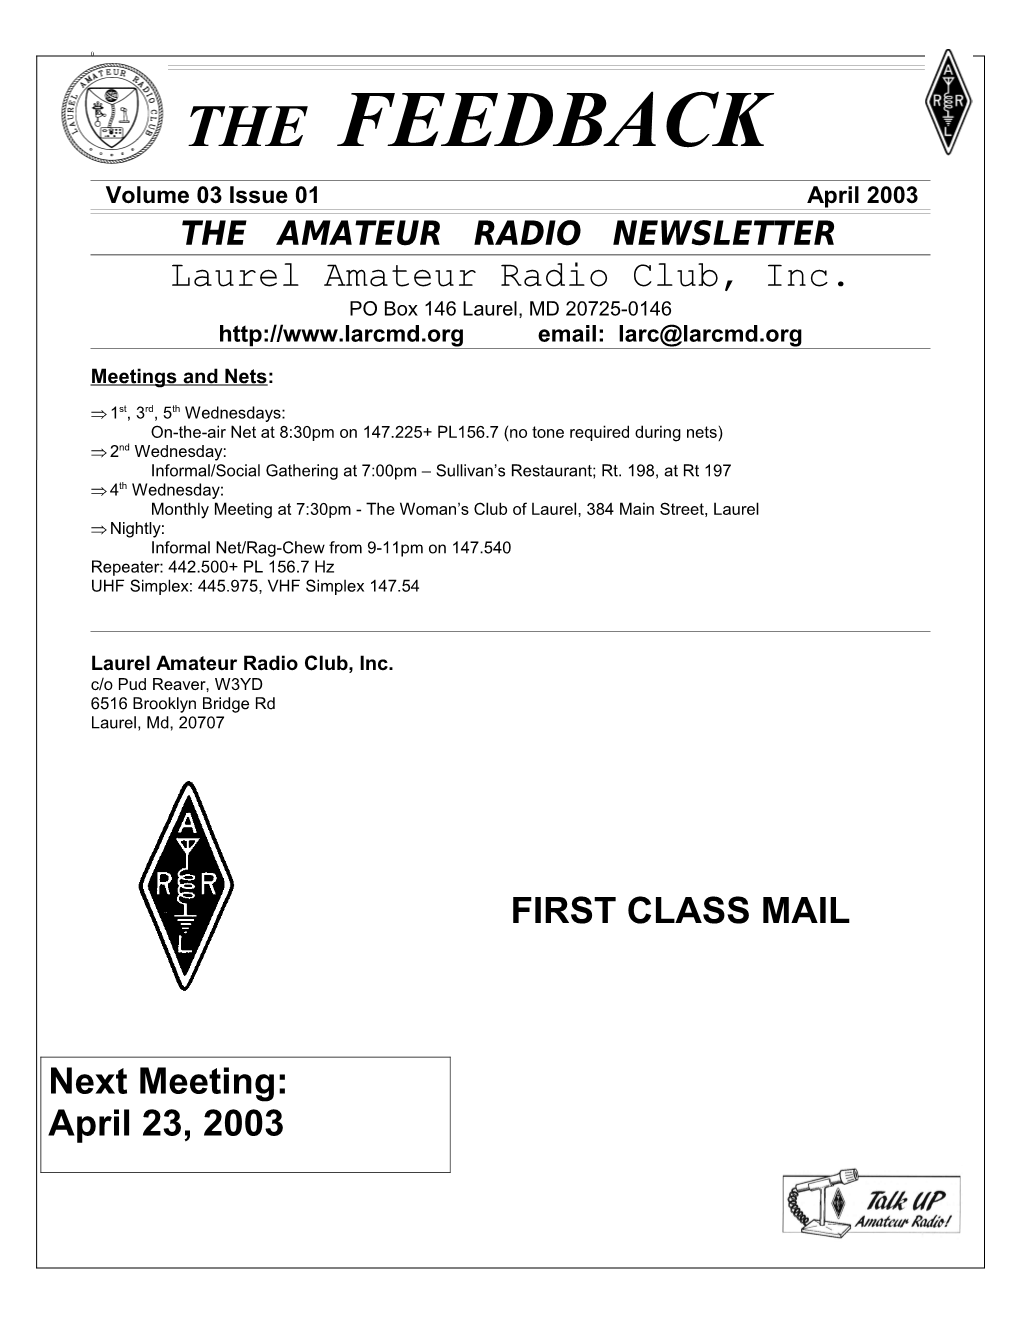 The Amateur Radio Newsletter